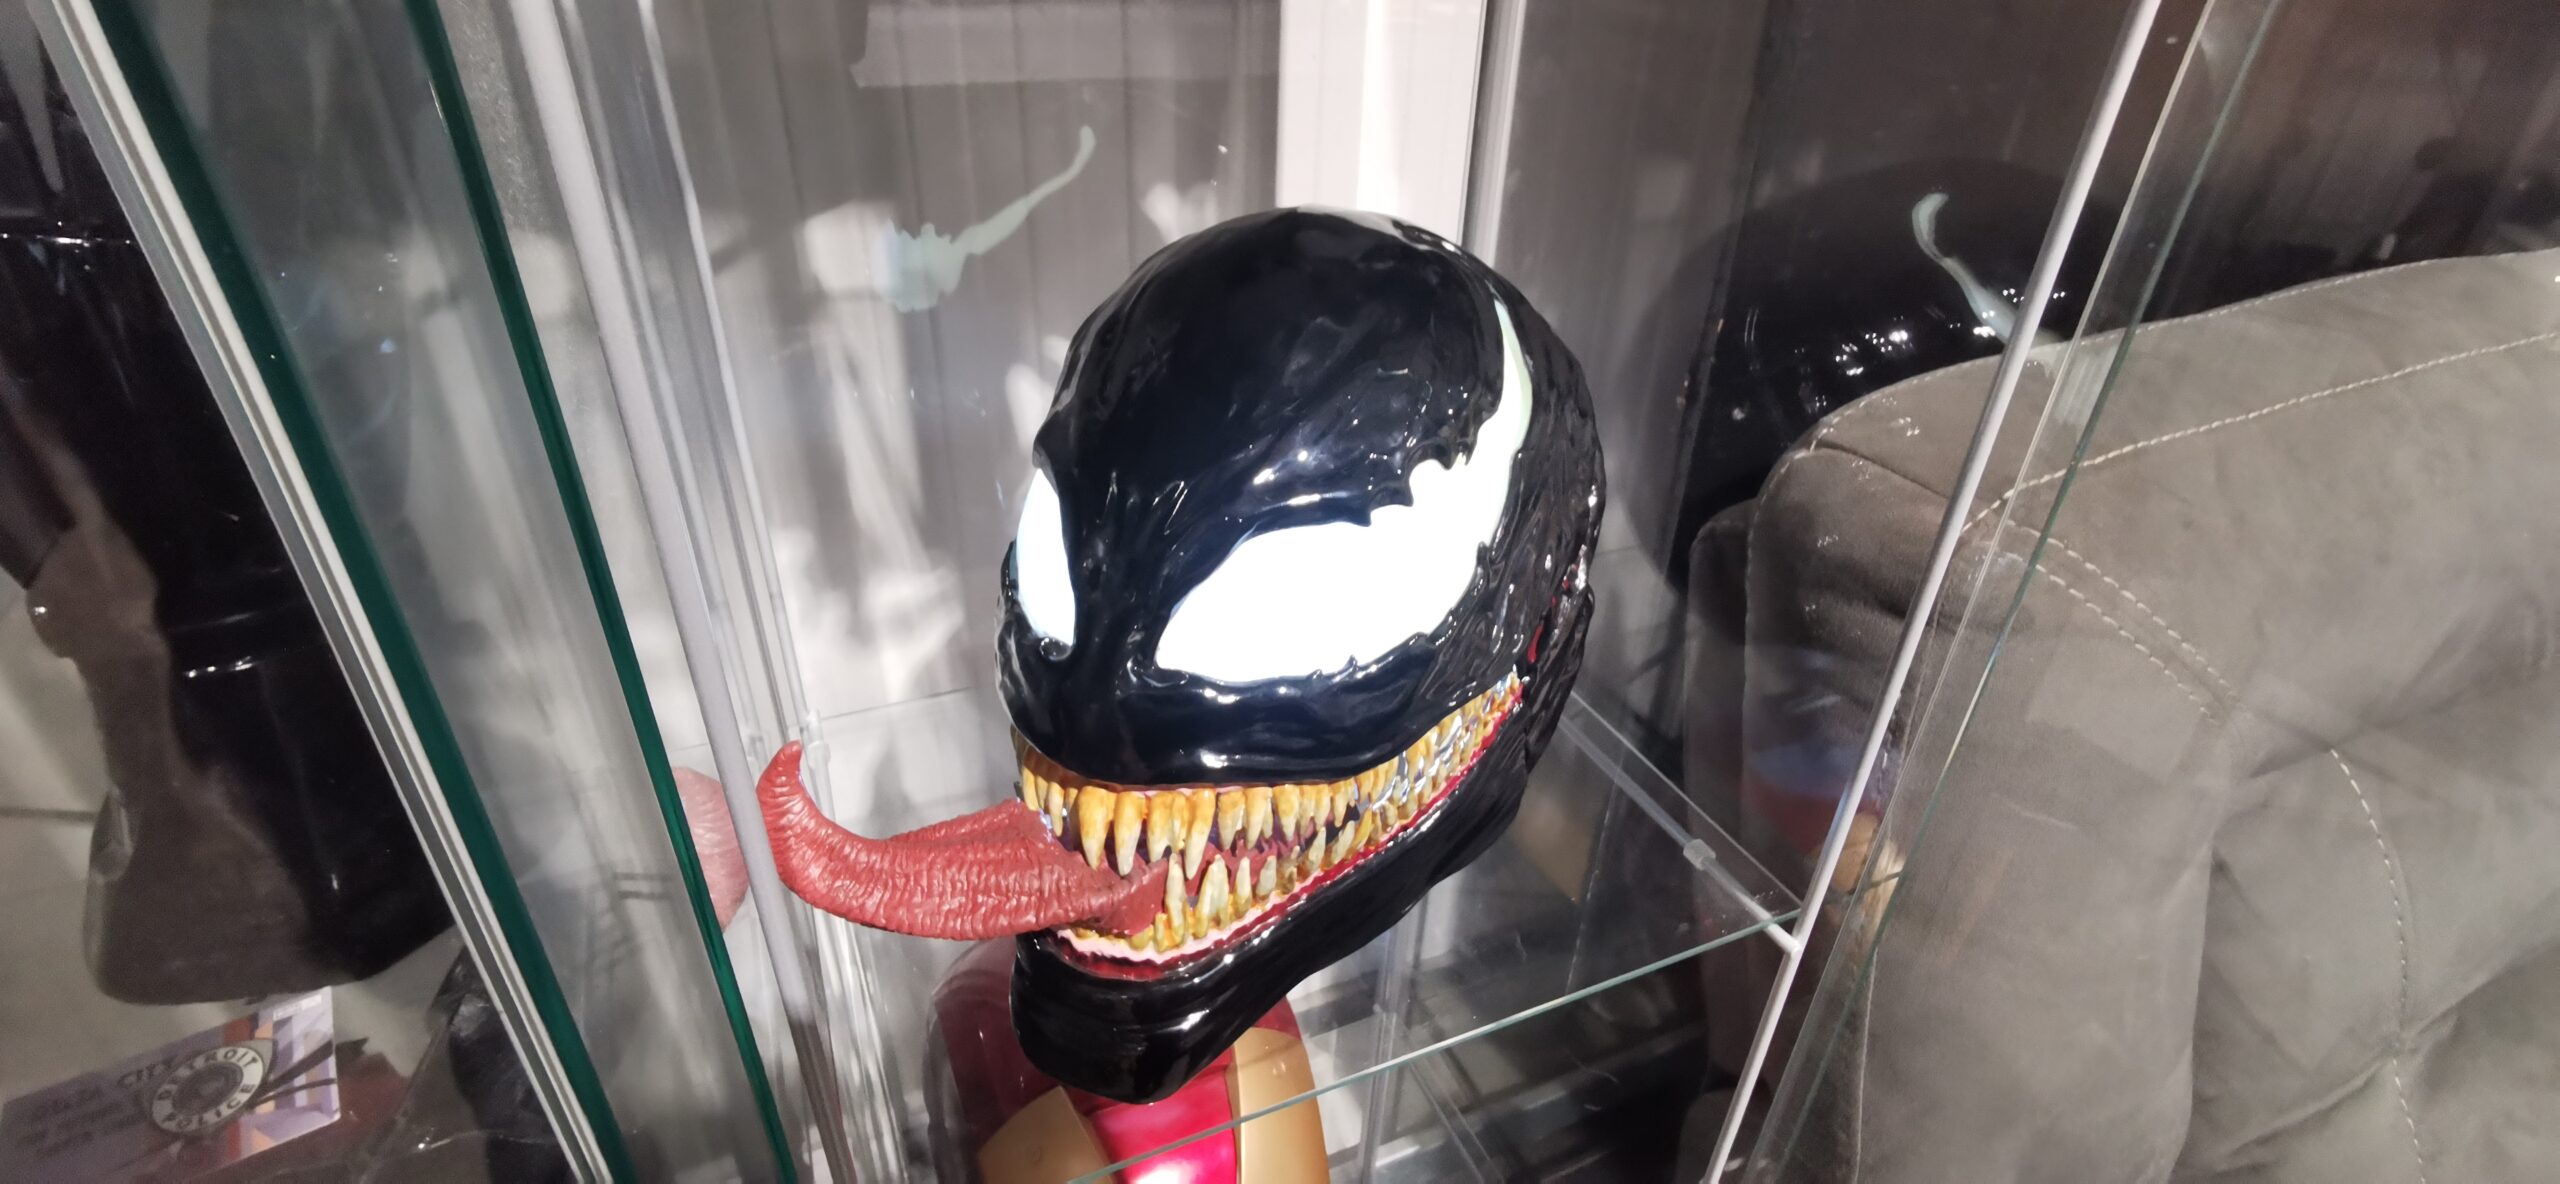 venom mask with tongue